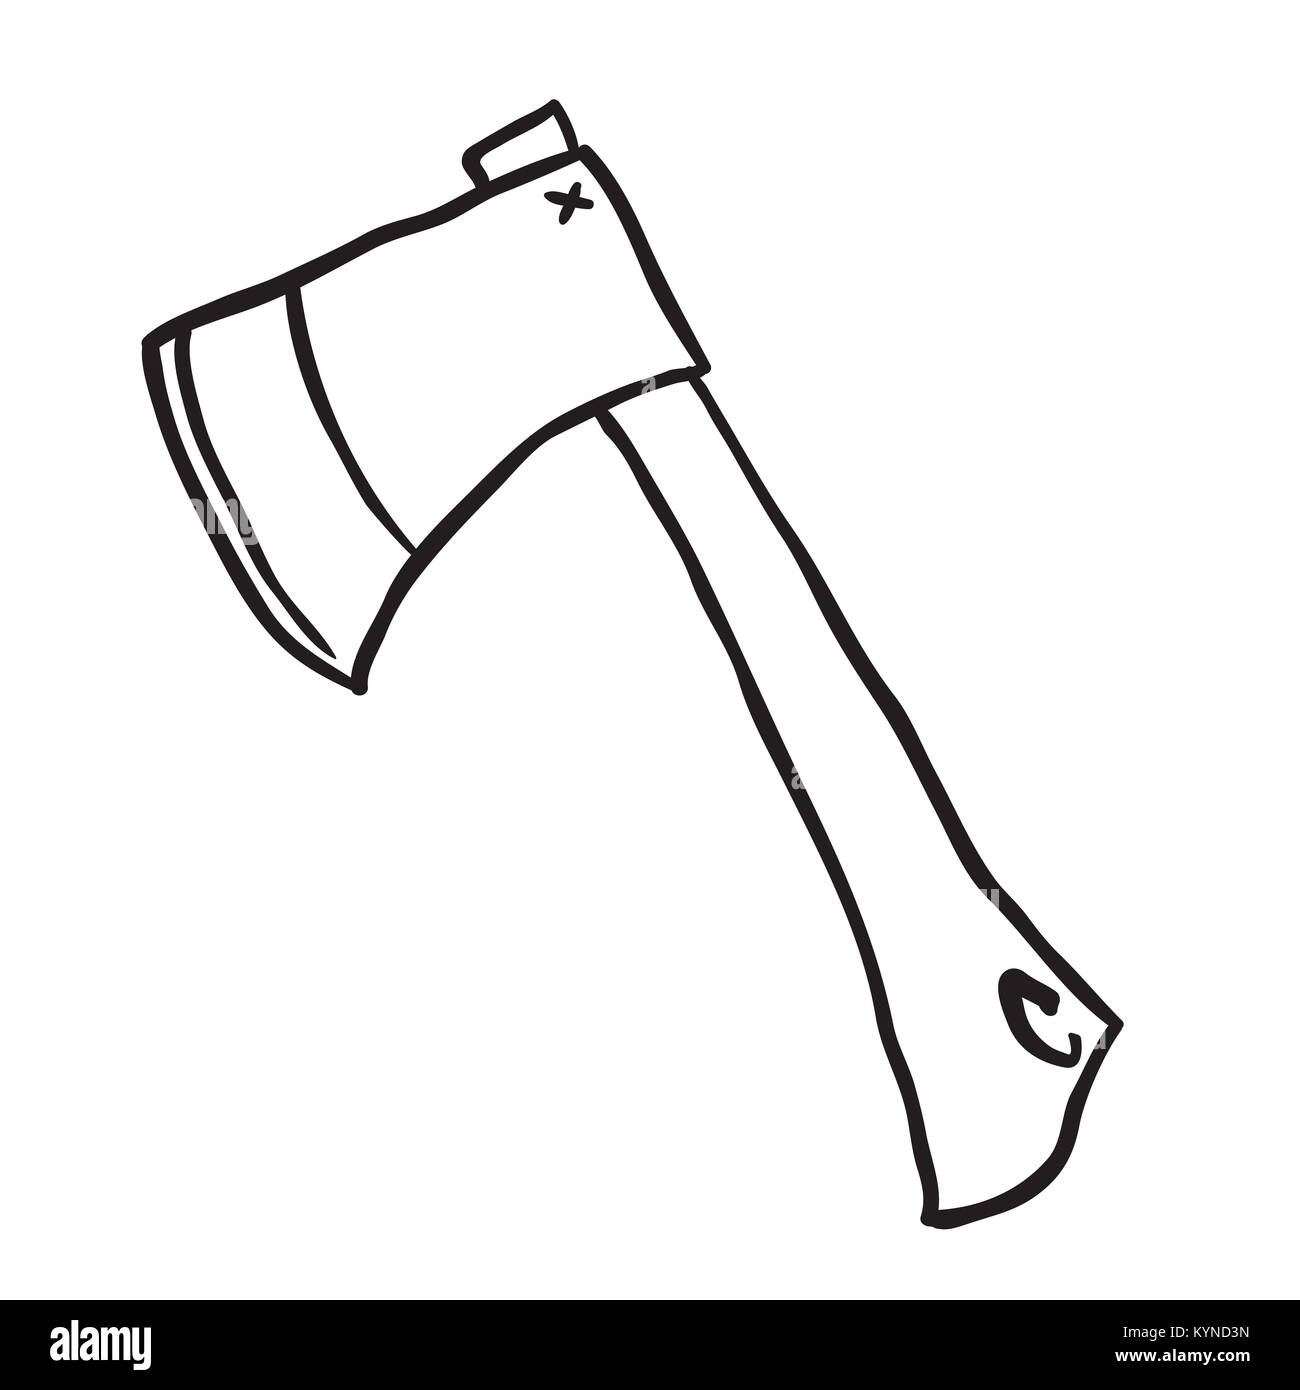 Cartoon axe Black and White Stock Photos & Images - Alamy